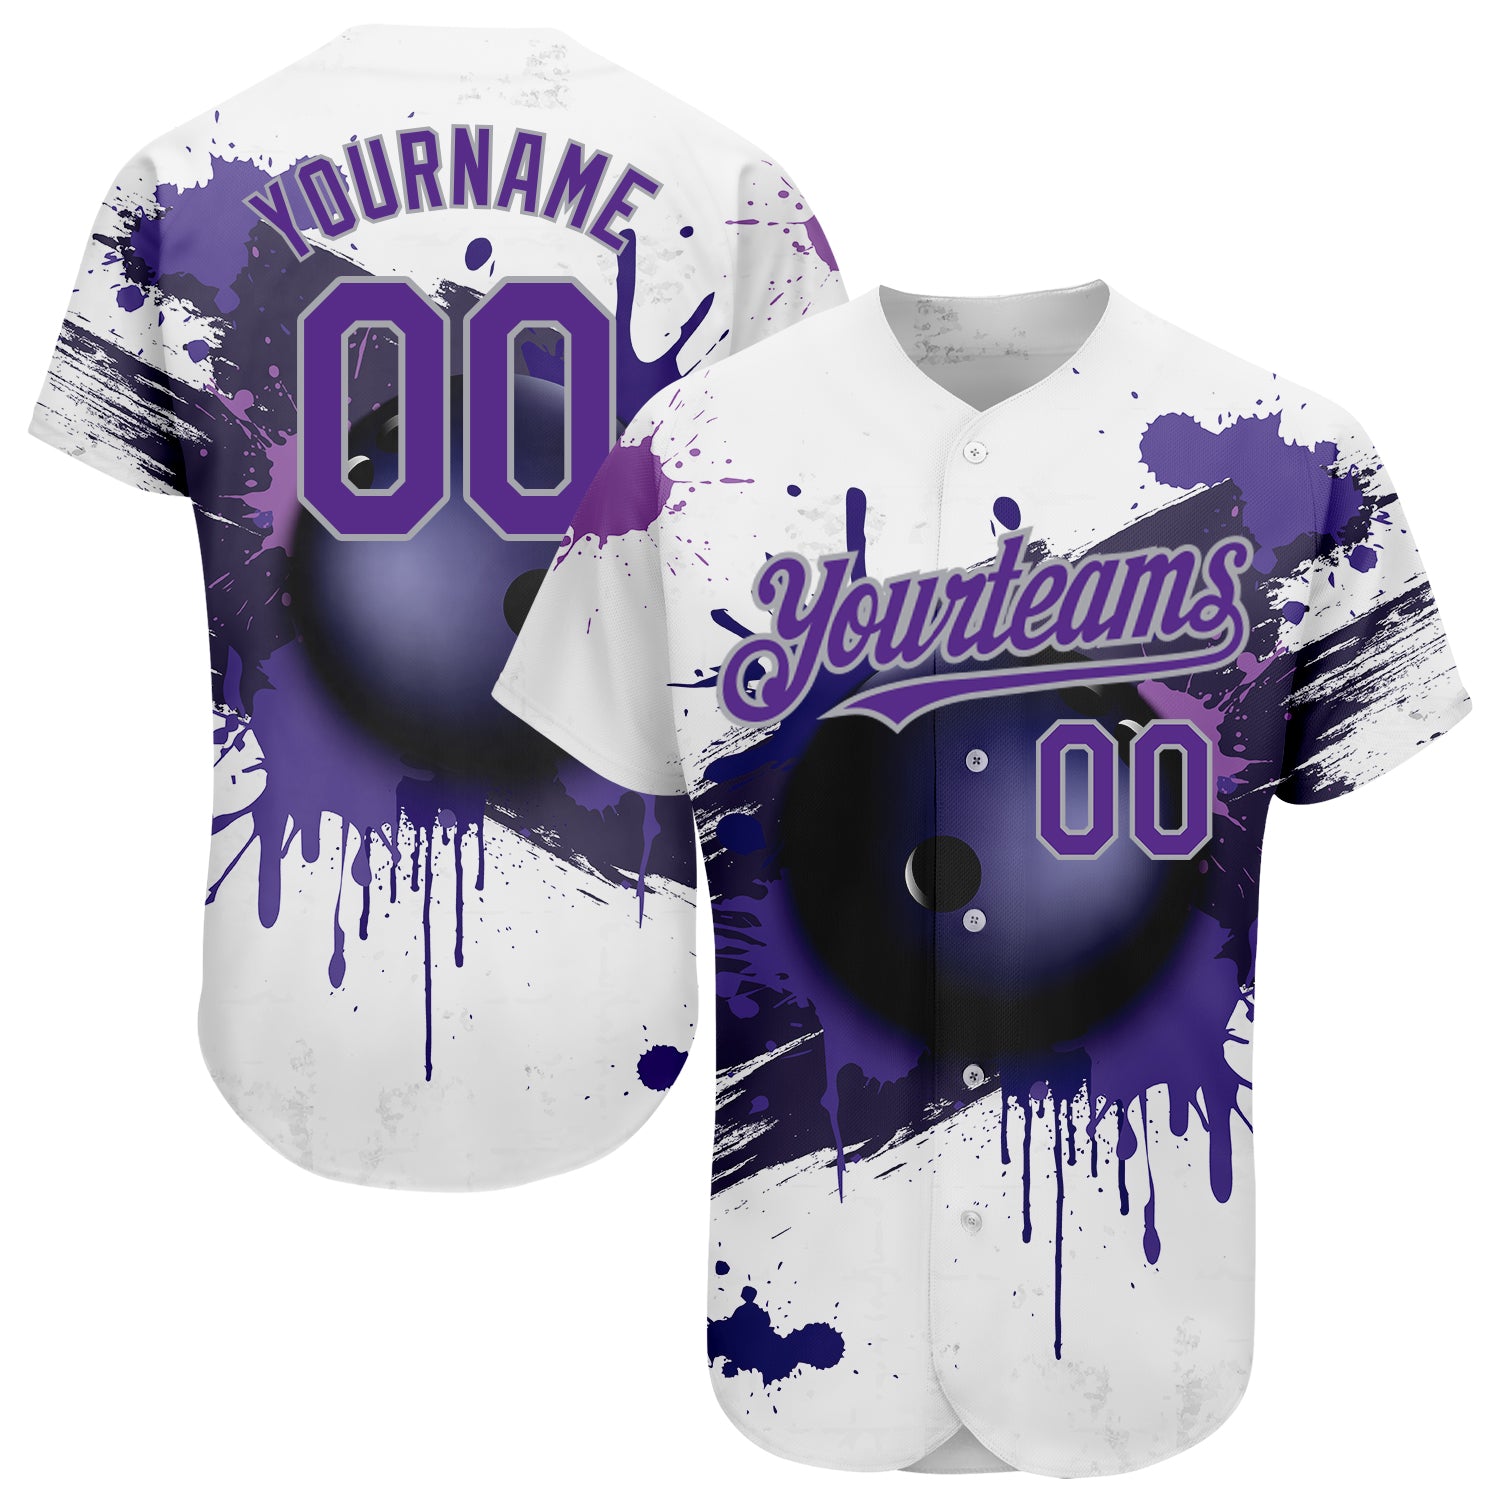 Custom Purple Baseball Jersey With White Piping Customized 